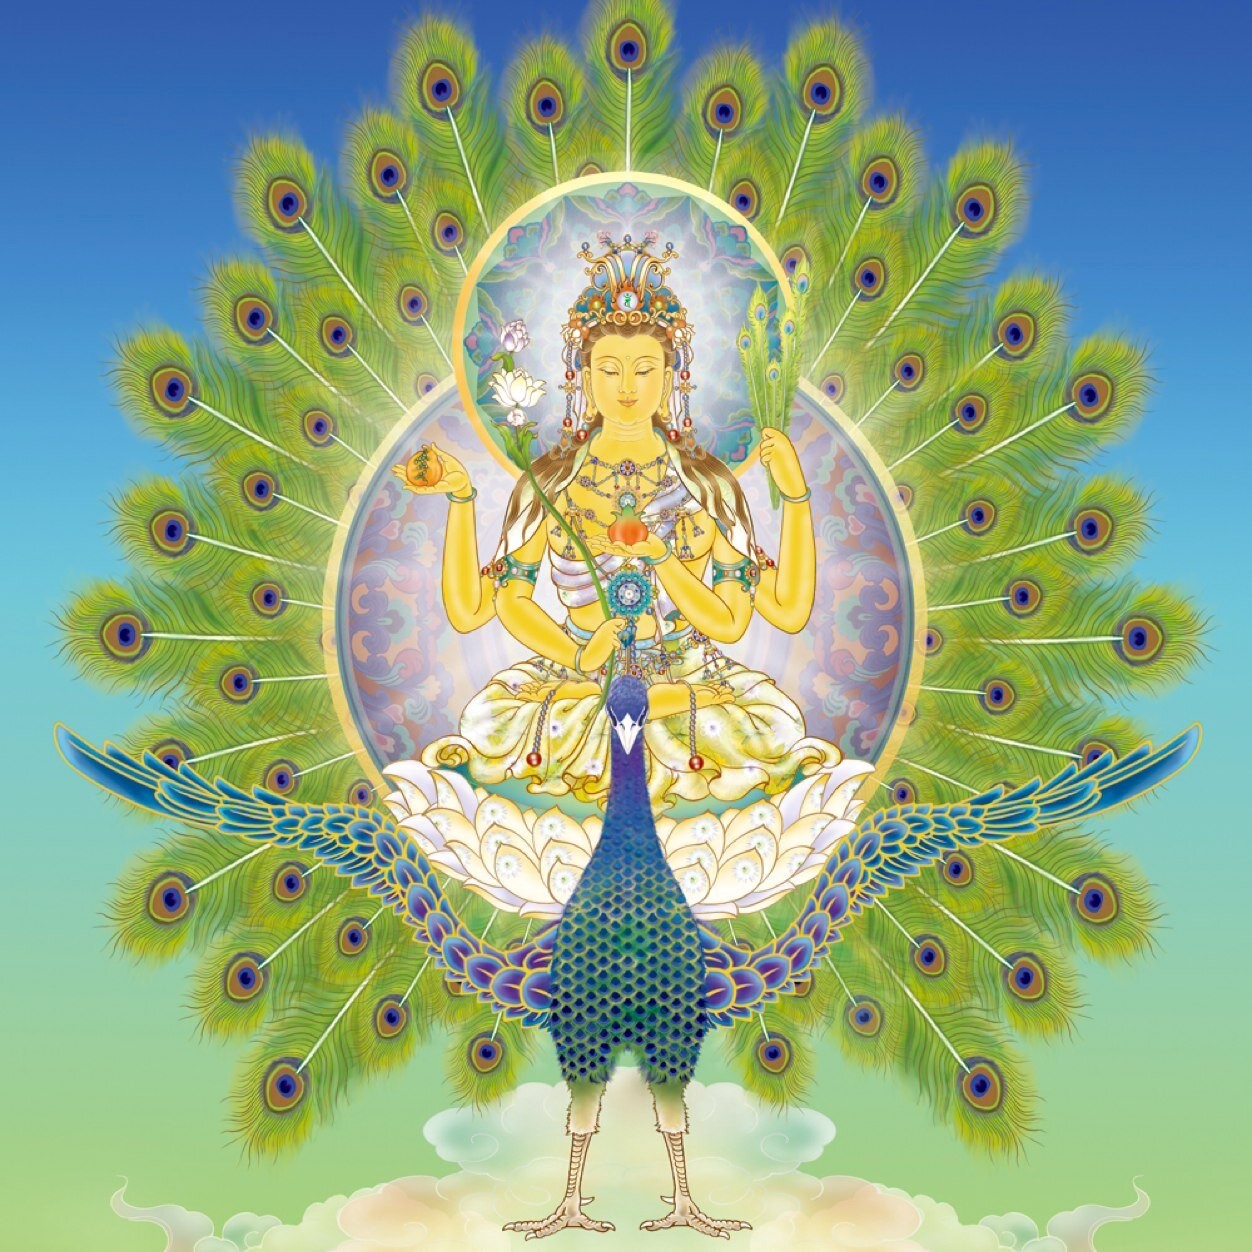 Bodhisattva and Peacock